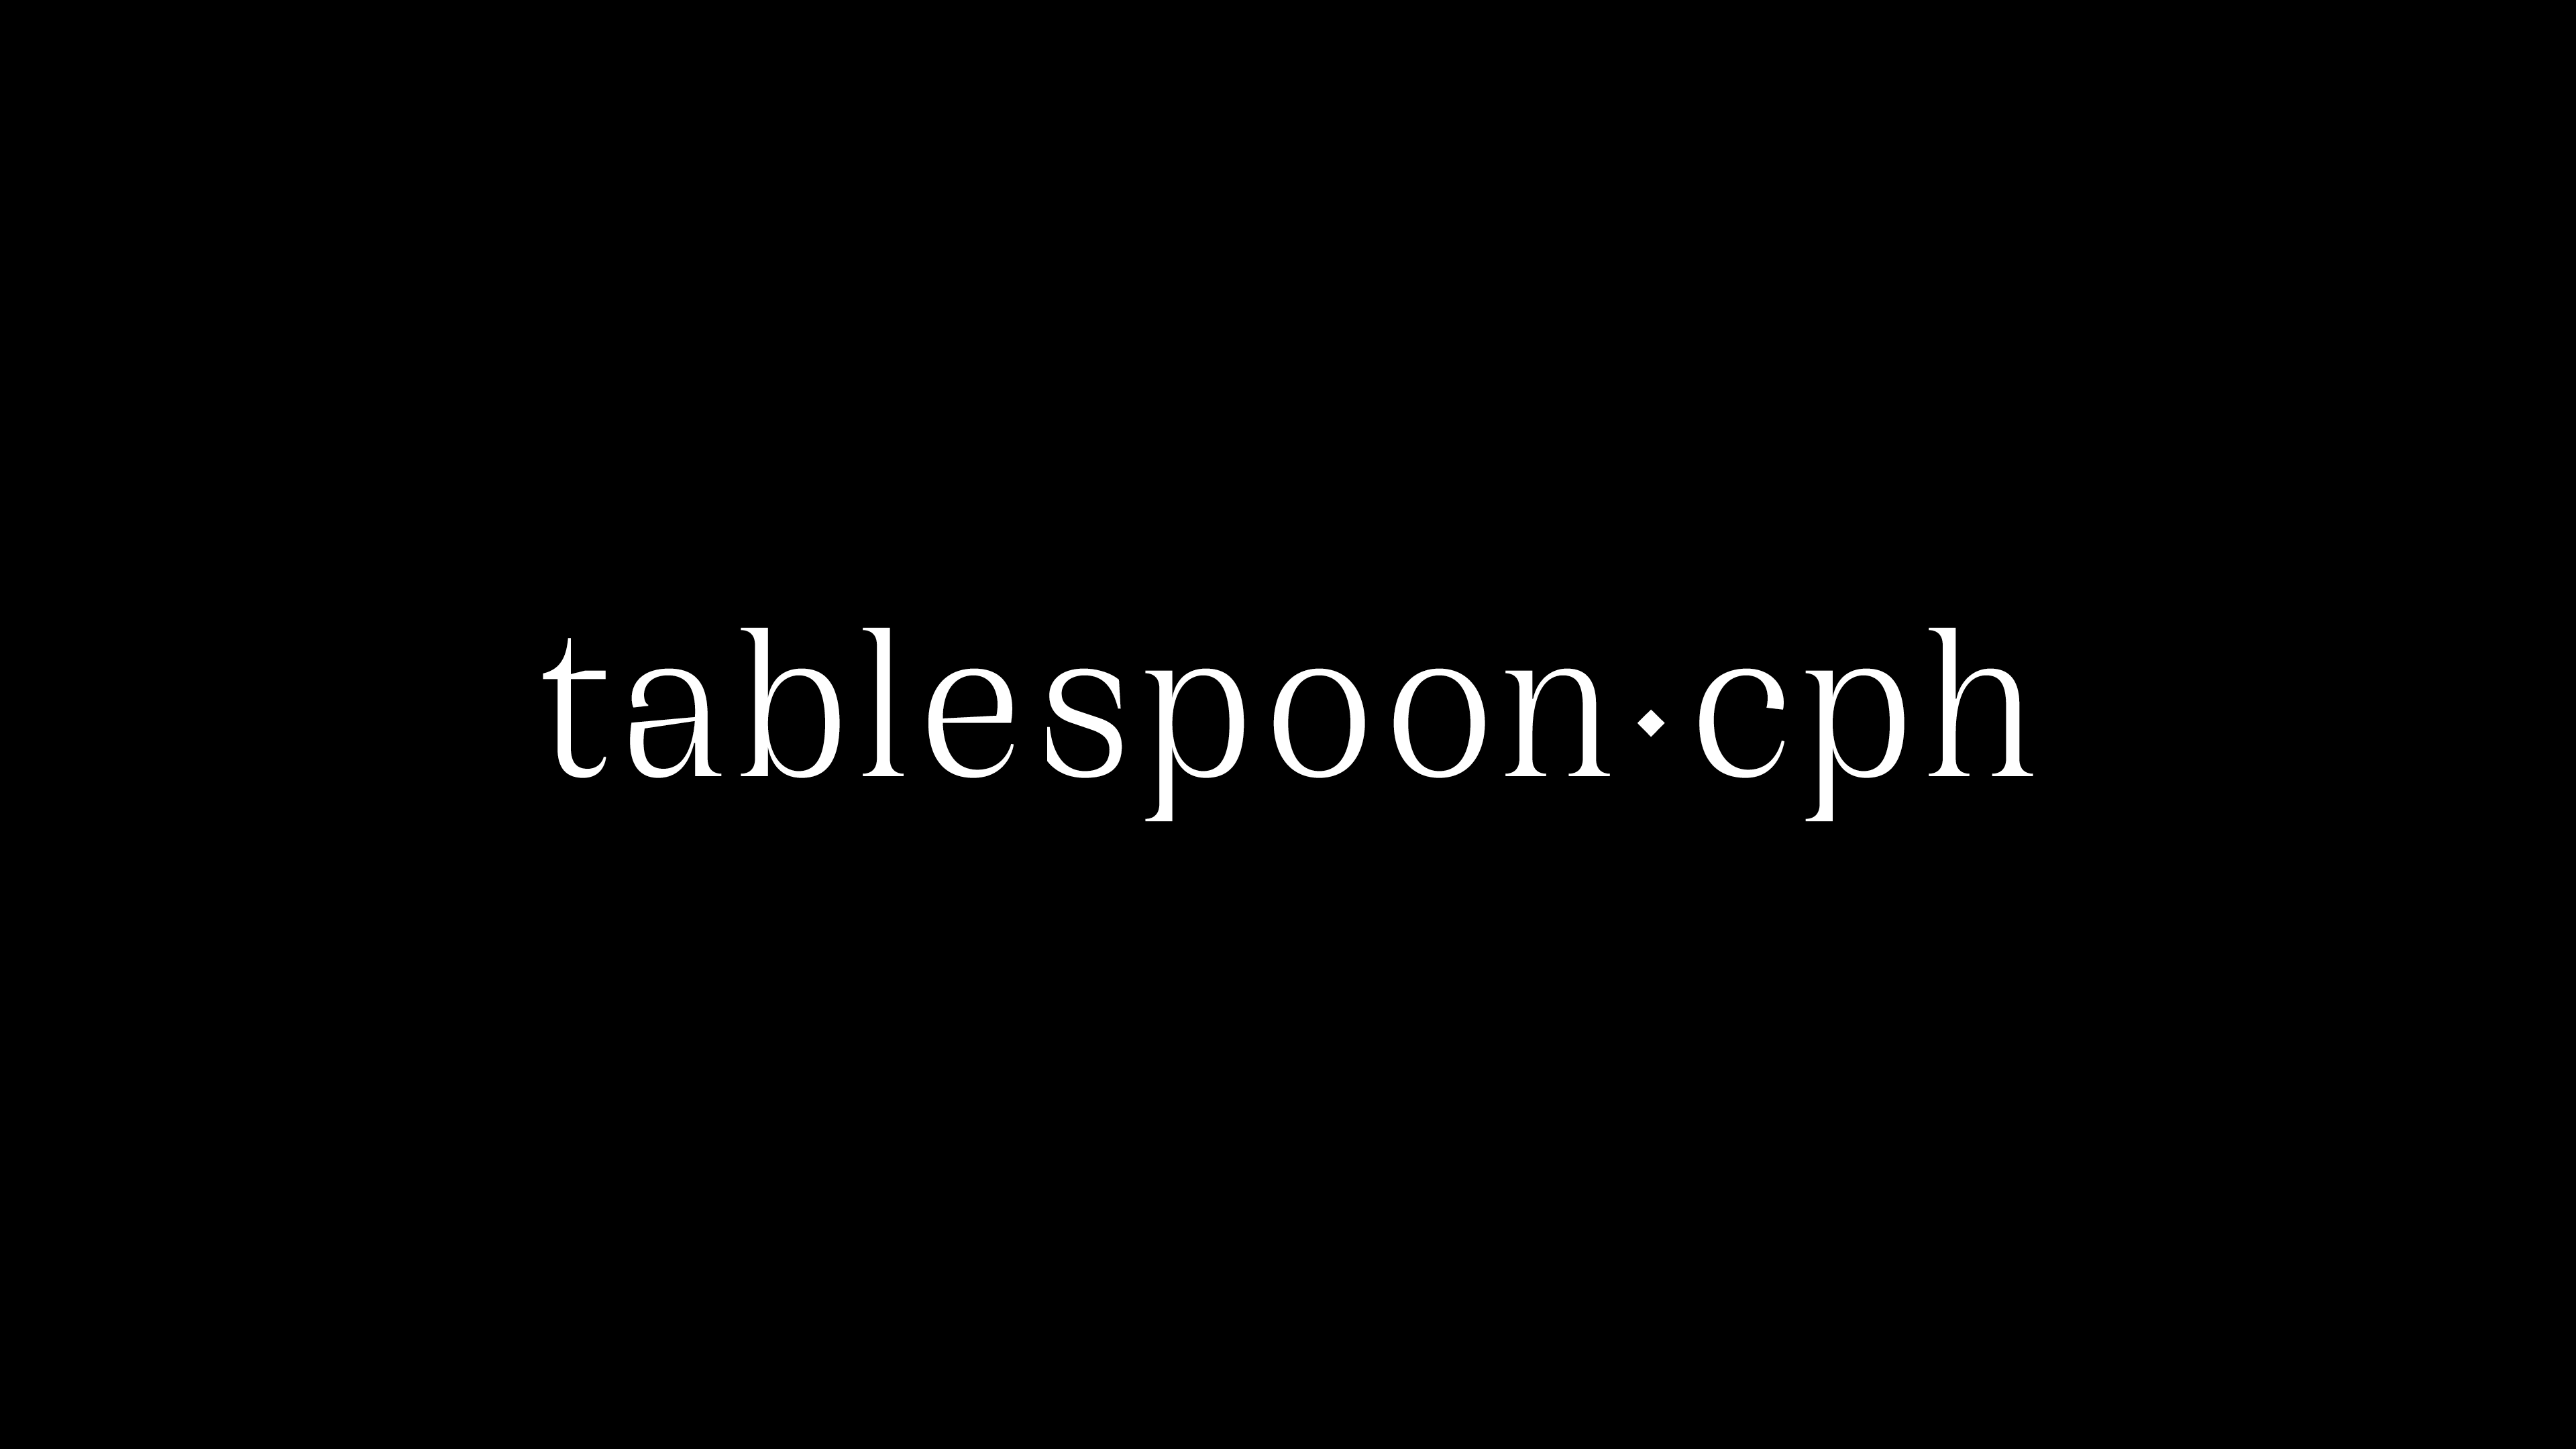 TablespoonCph_DesignPraesentation3